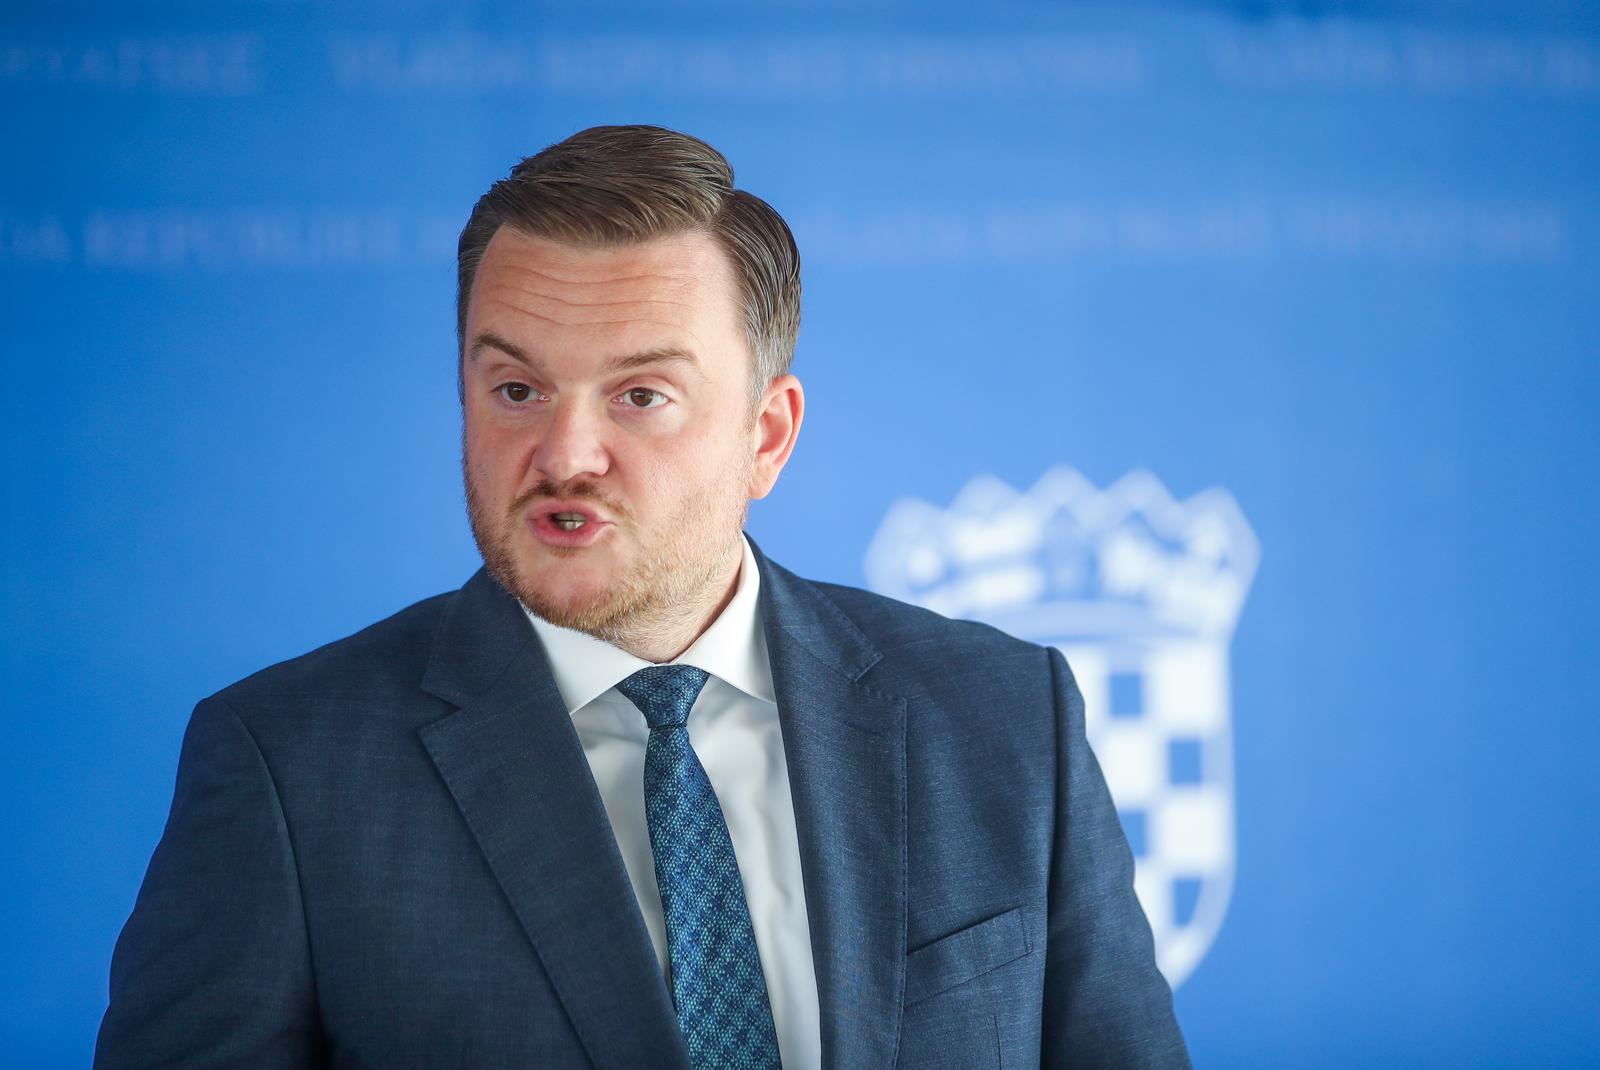  Ministar financija Marko Primorac